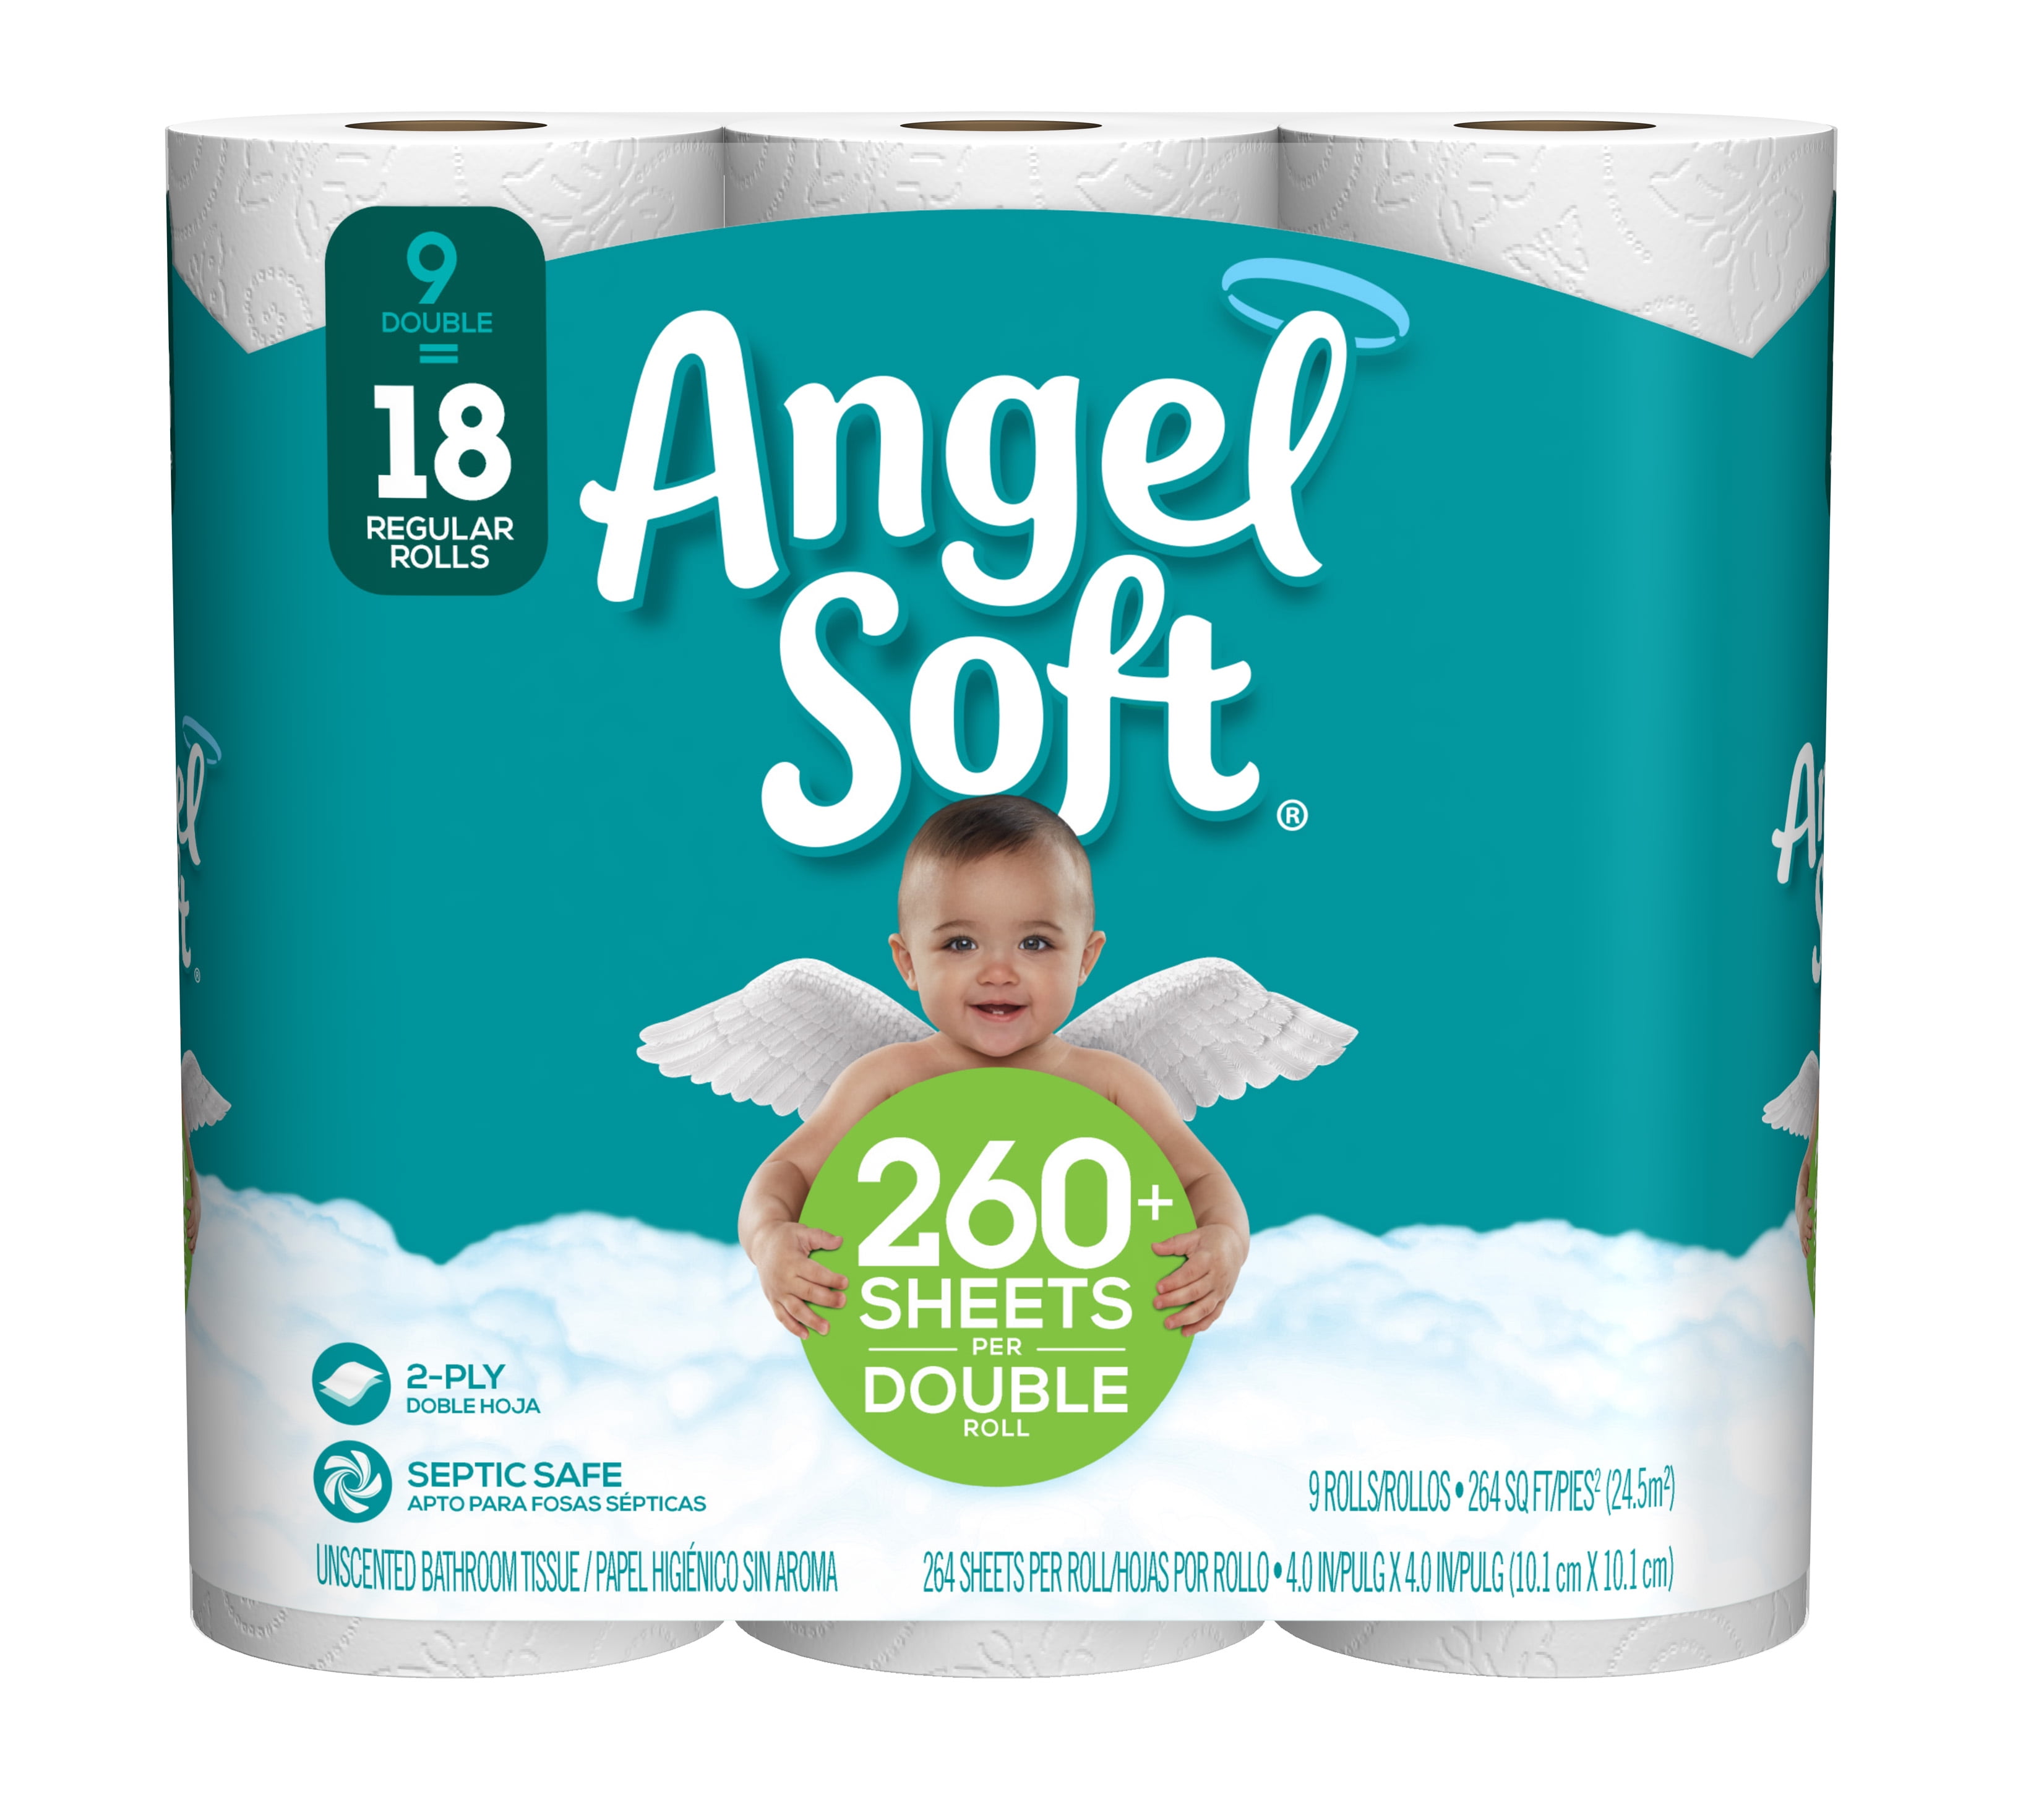 Angel Soft Toilet Paper, 9 Double Rolls - Walmart.com